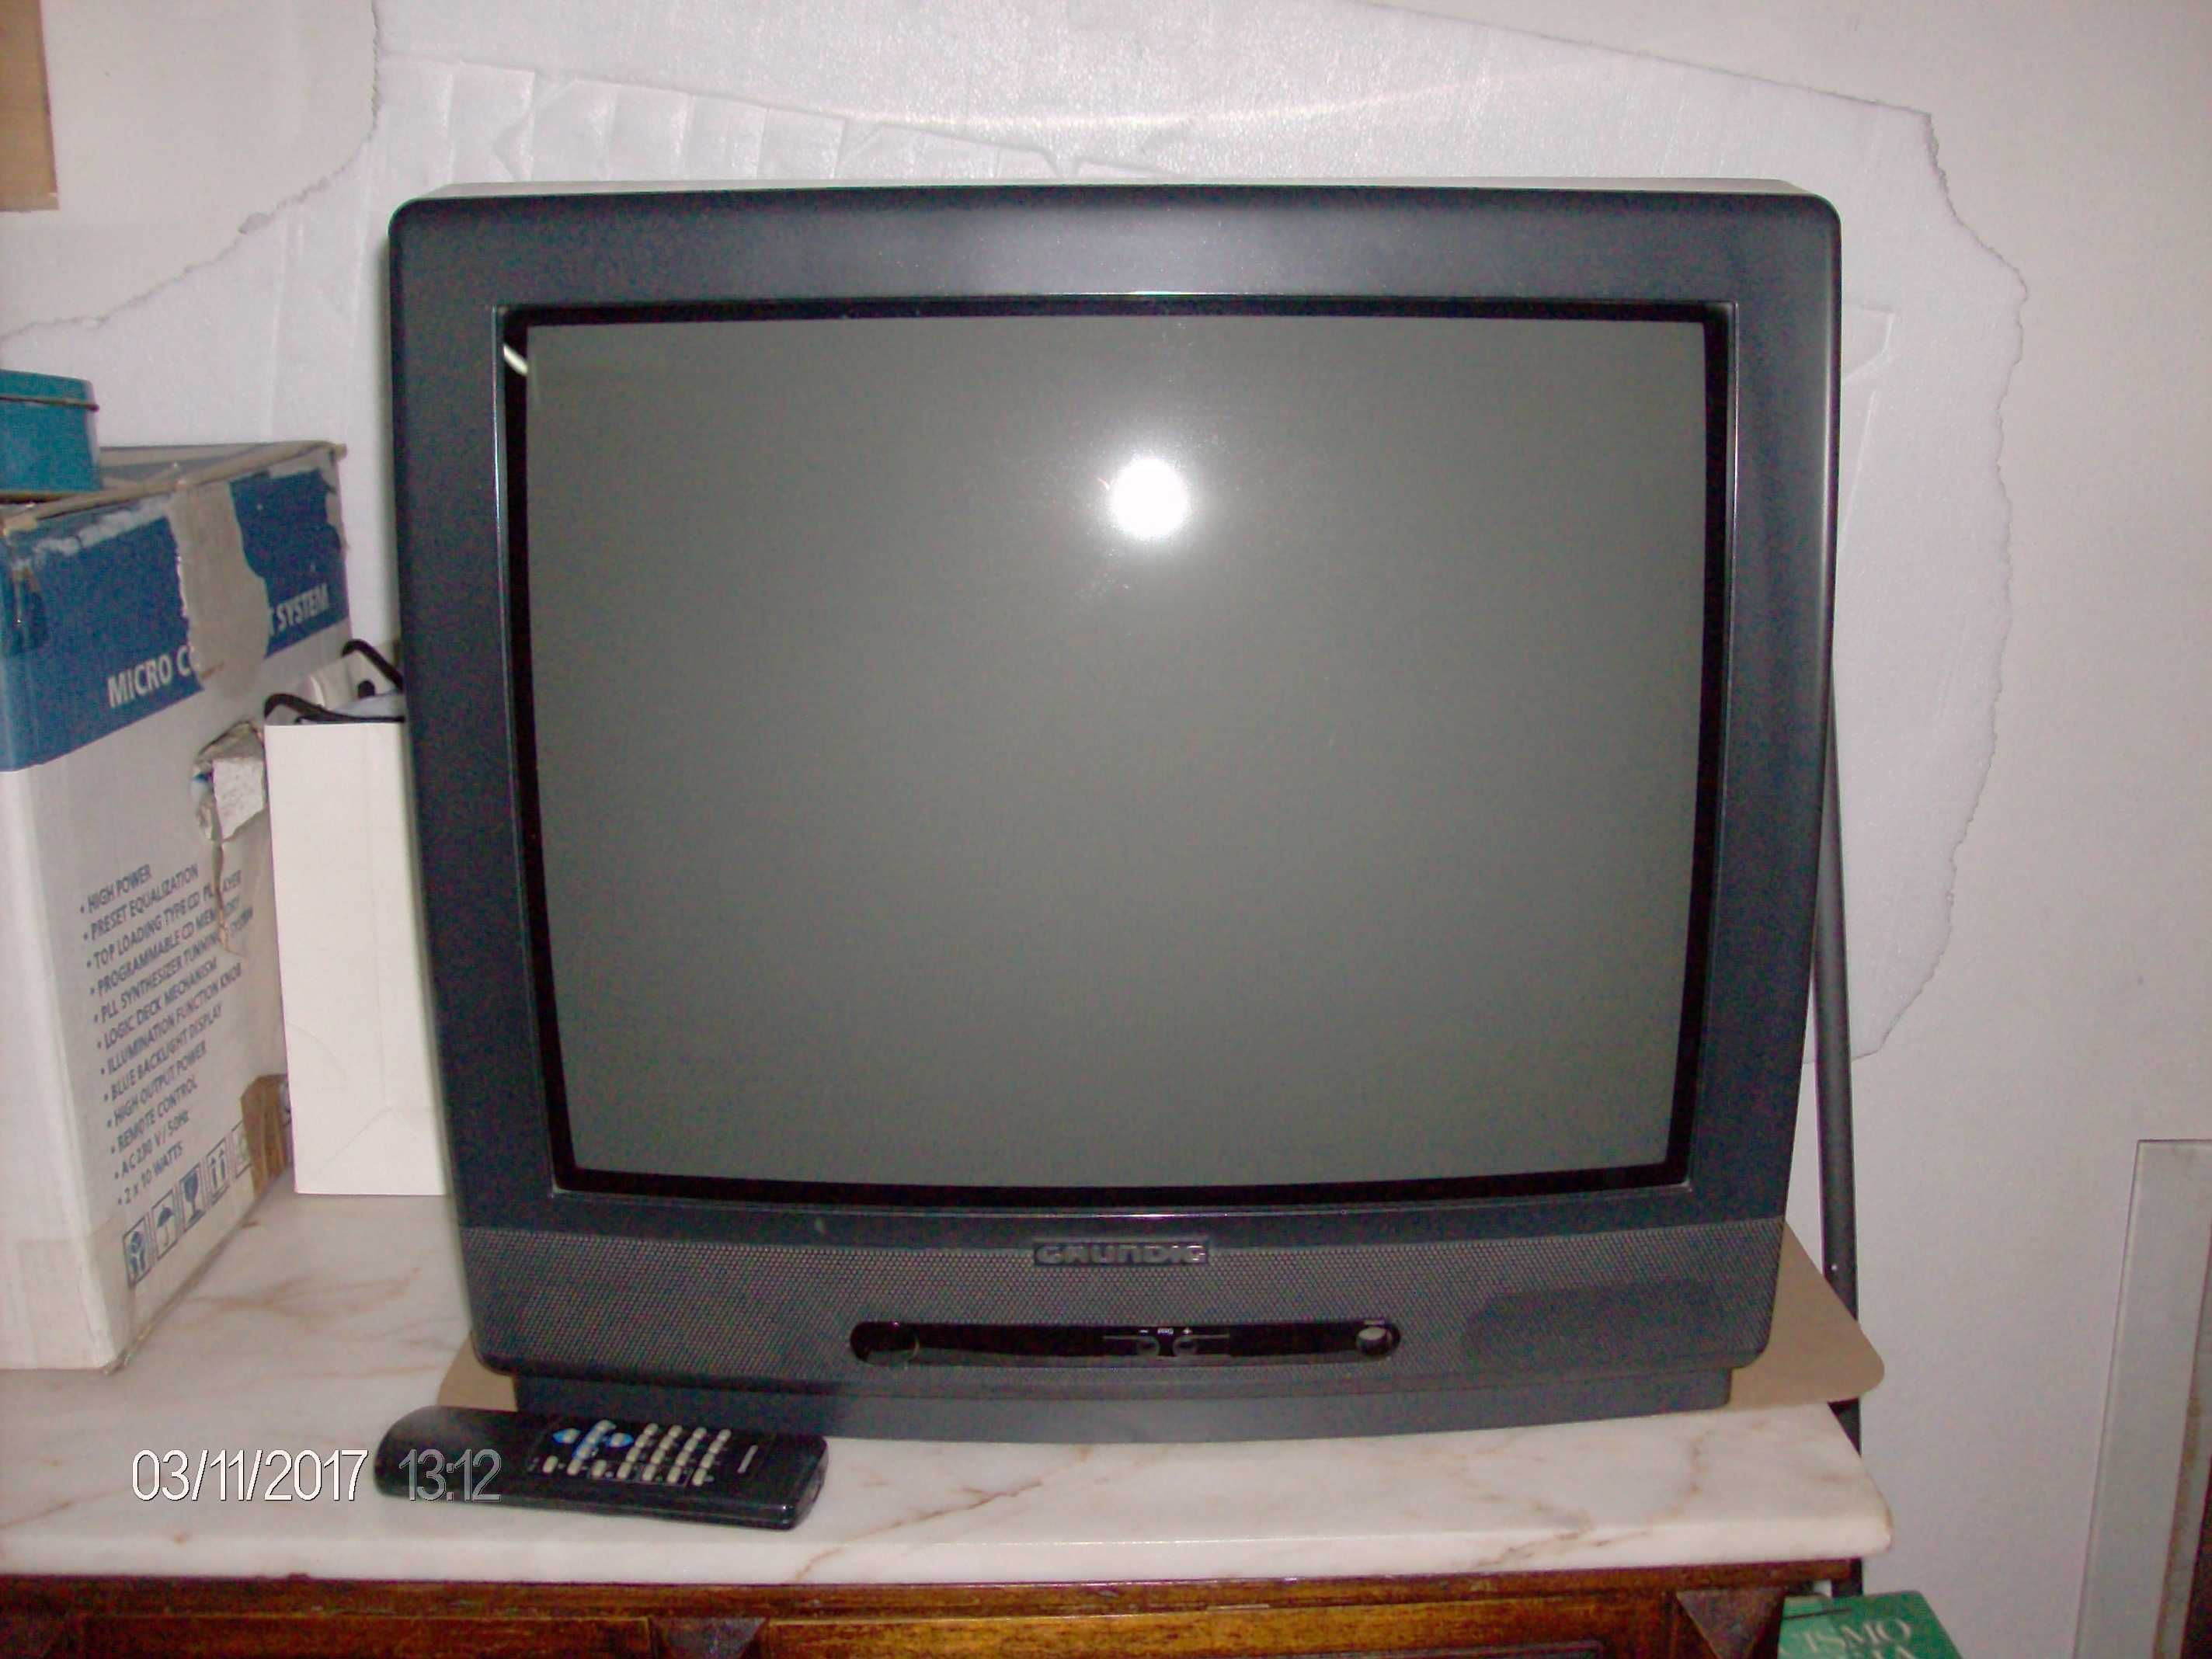 Televisão Grundig T55